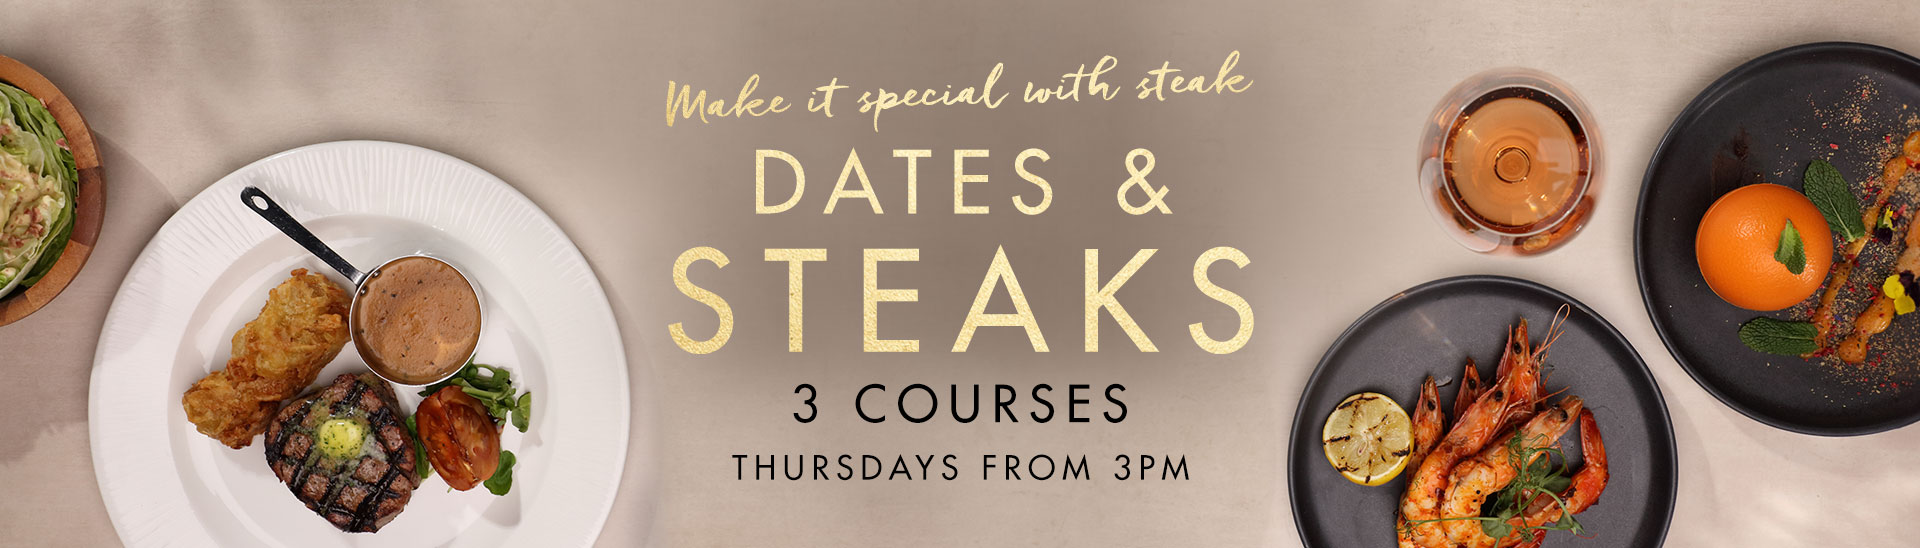 Dates & Steaks at Miller & Carter Thornhill